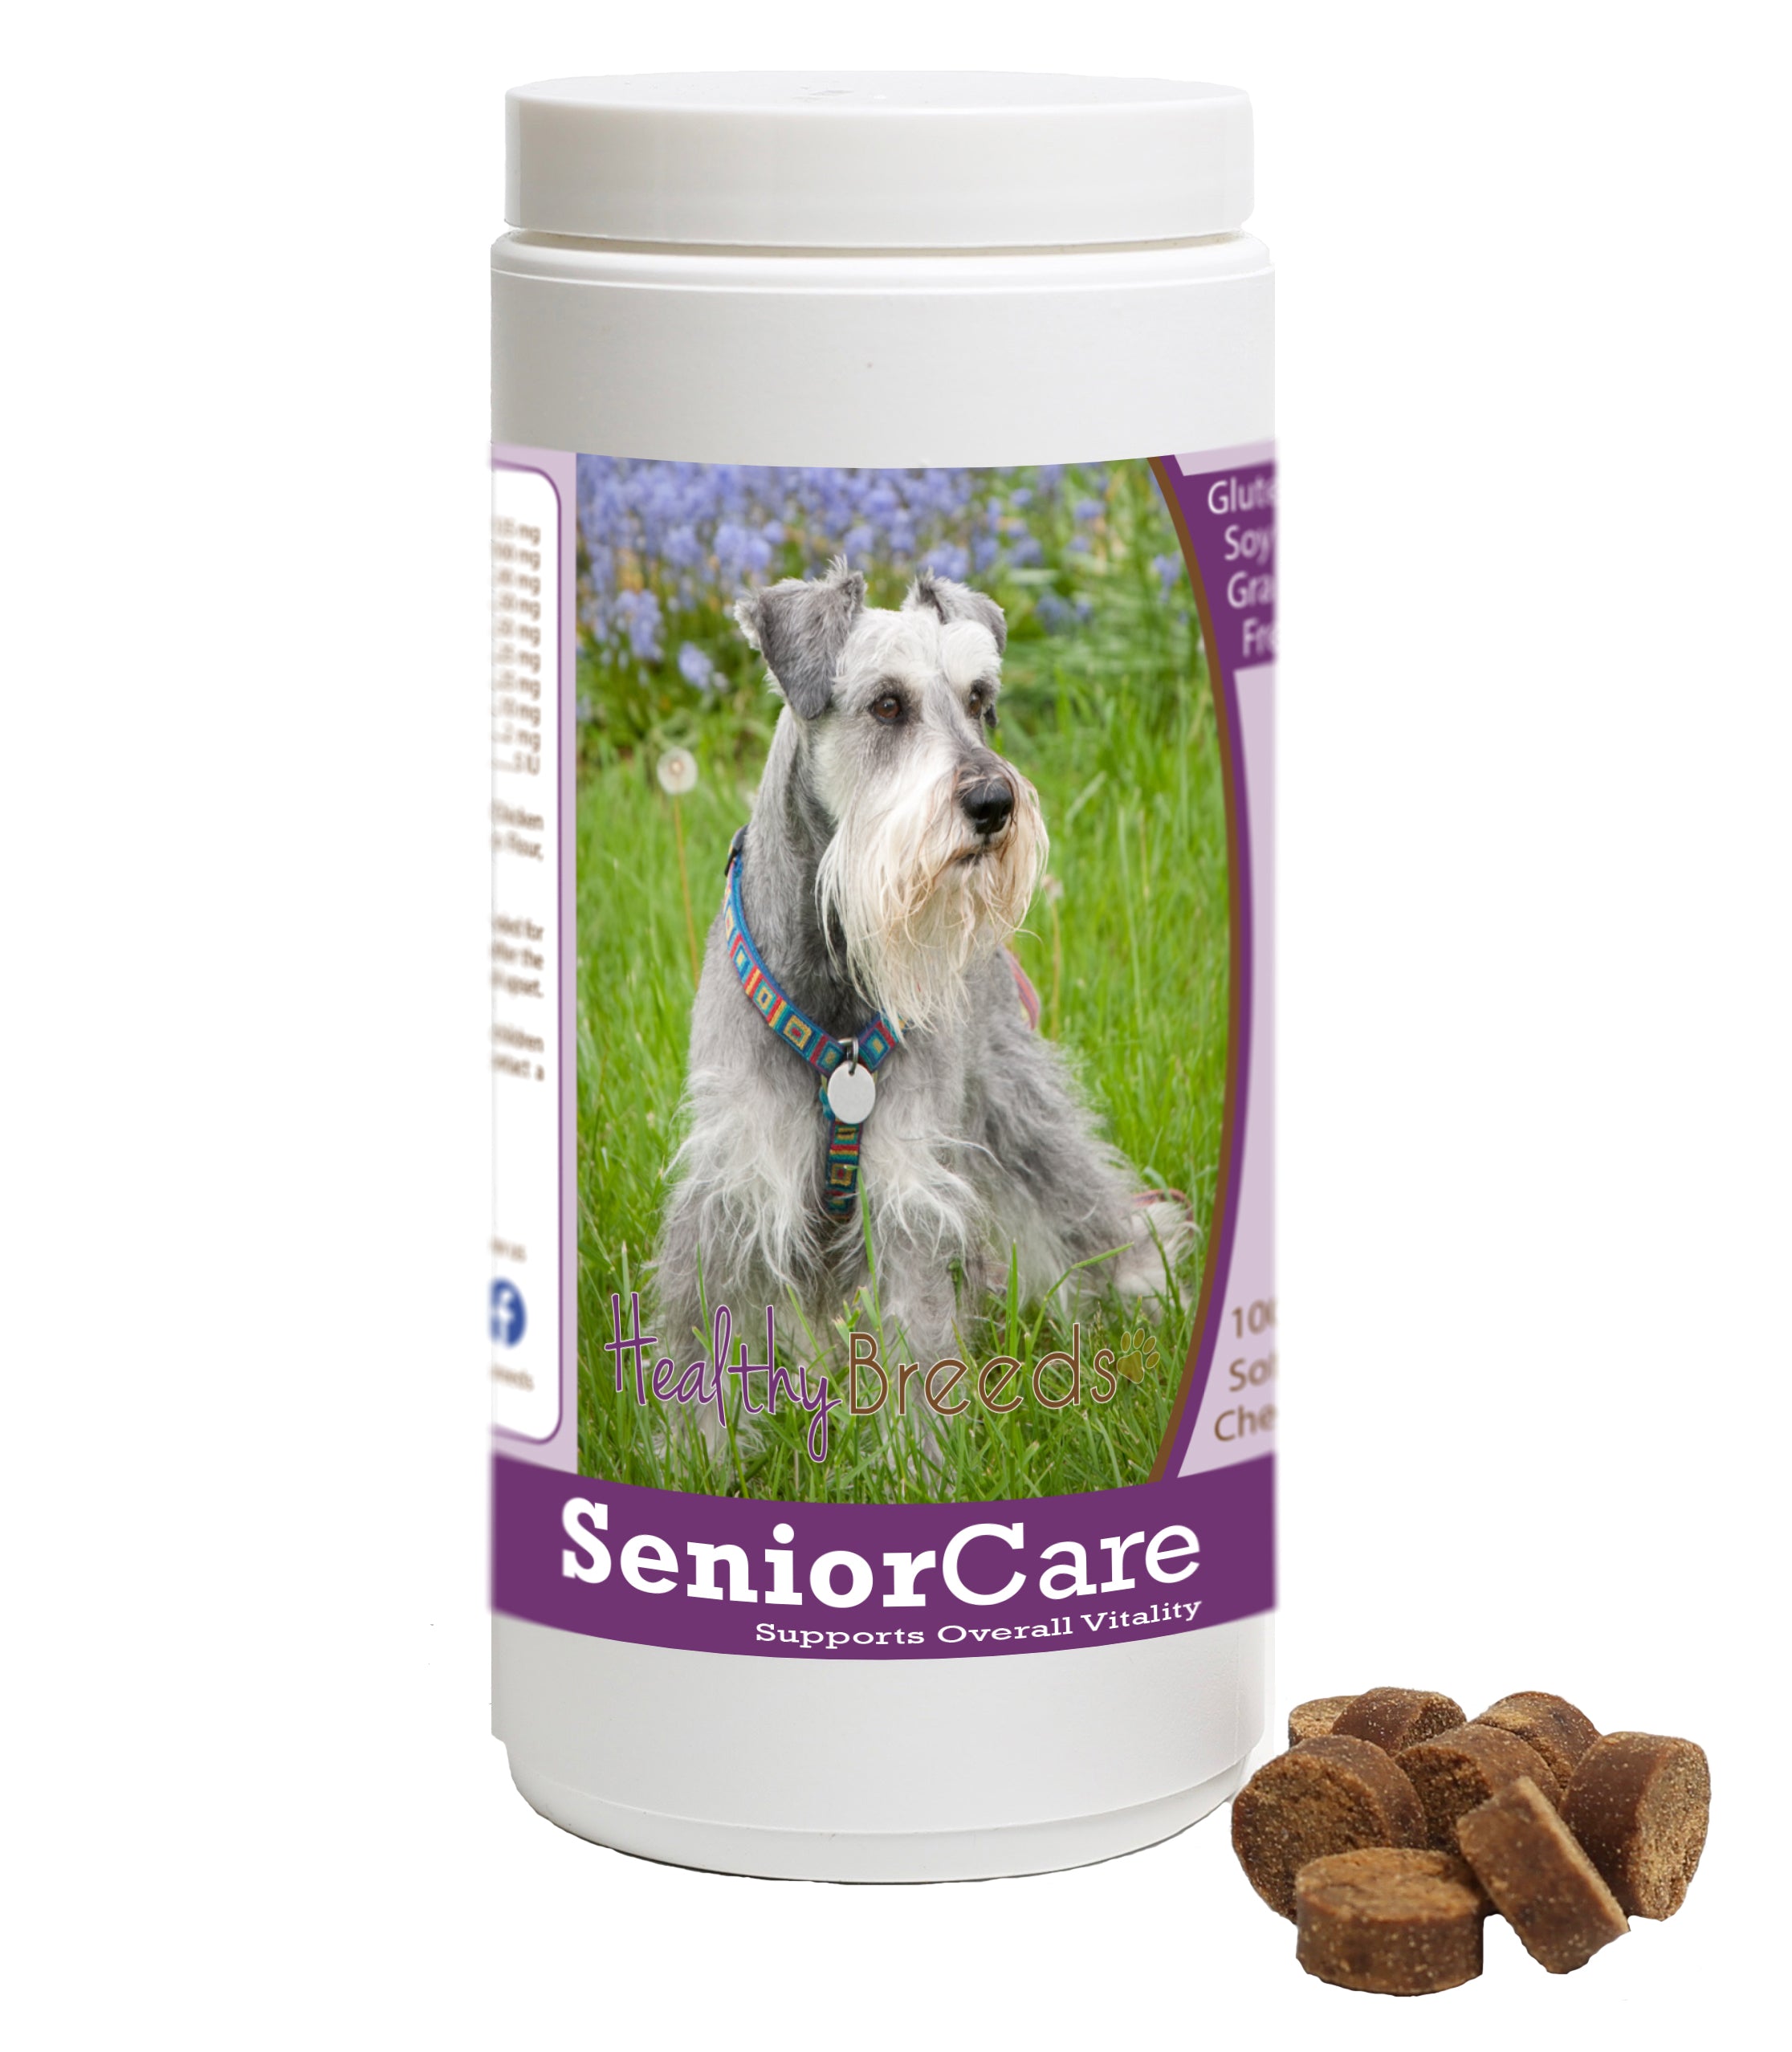 Healthy Breeds Senior Dog Care Soft Chews - Miniature Schnauzer